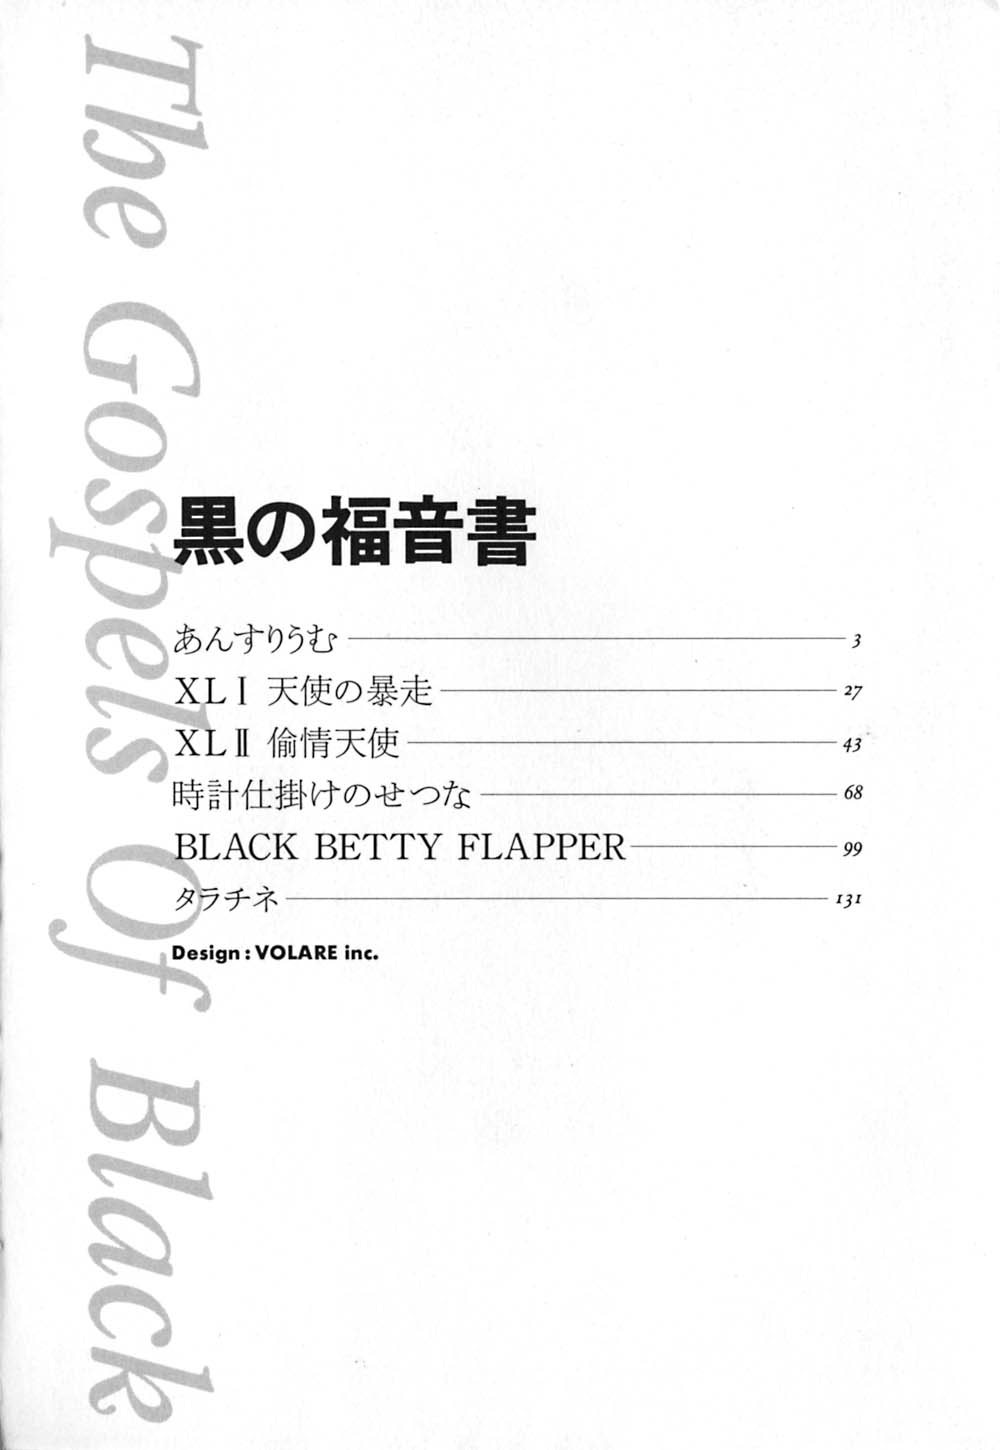 [Johanne Yamamoto] The Gospels of Black [山本夜羽] 黒の福音書